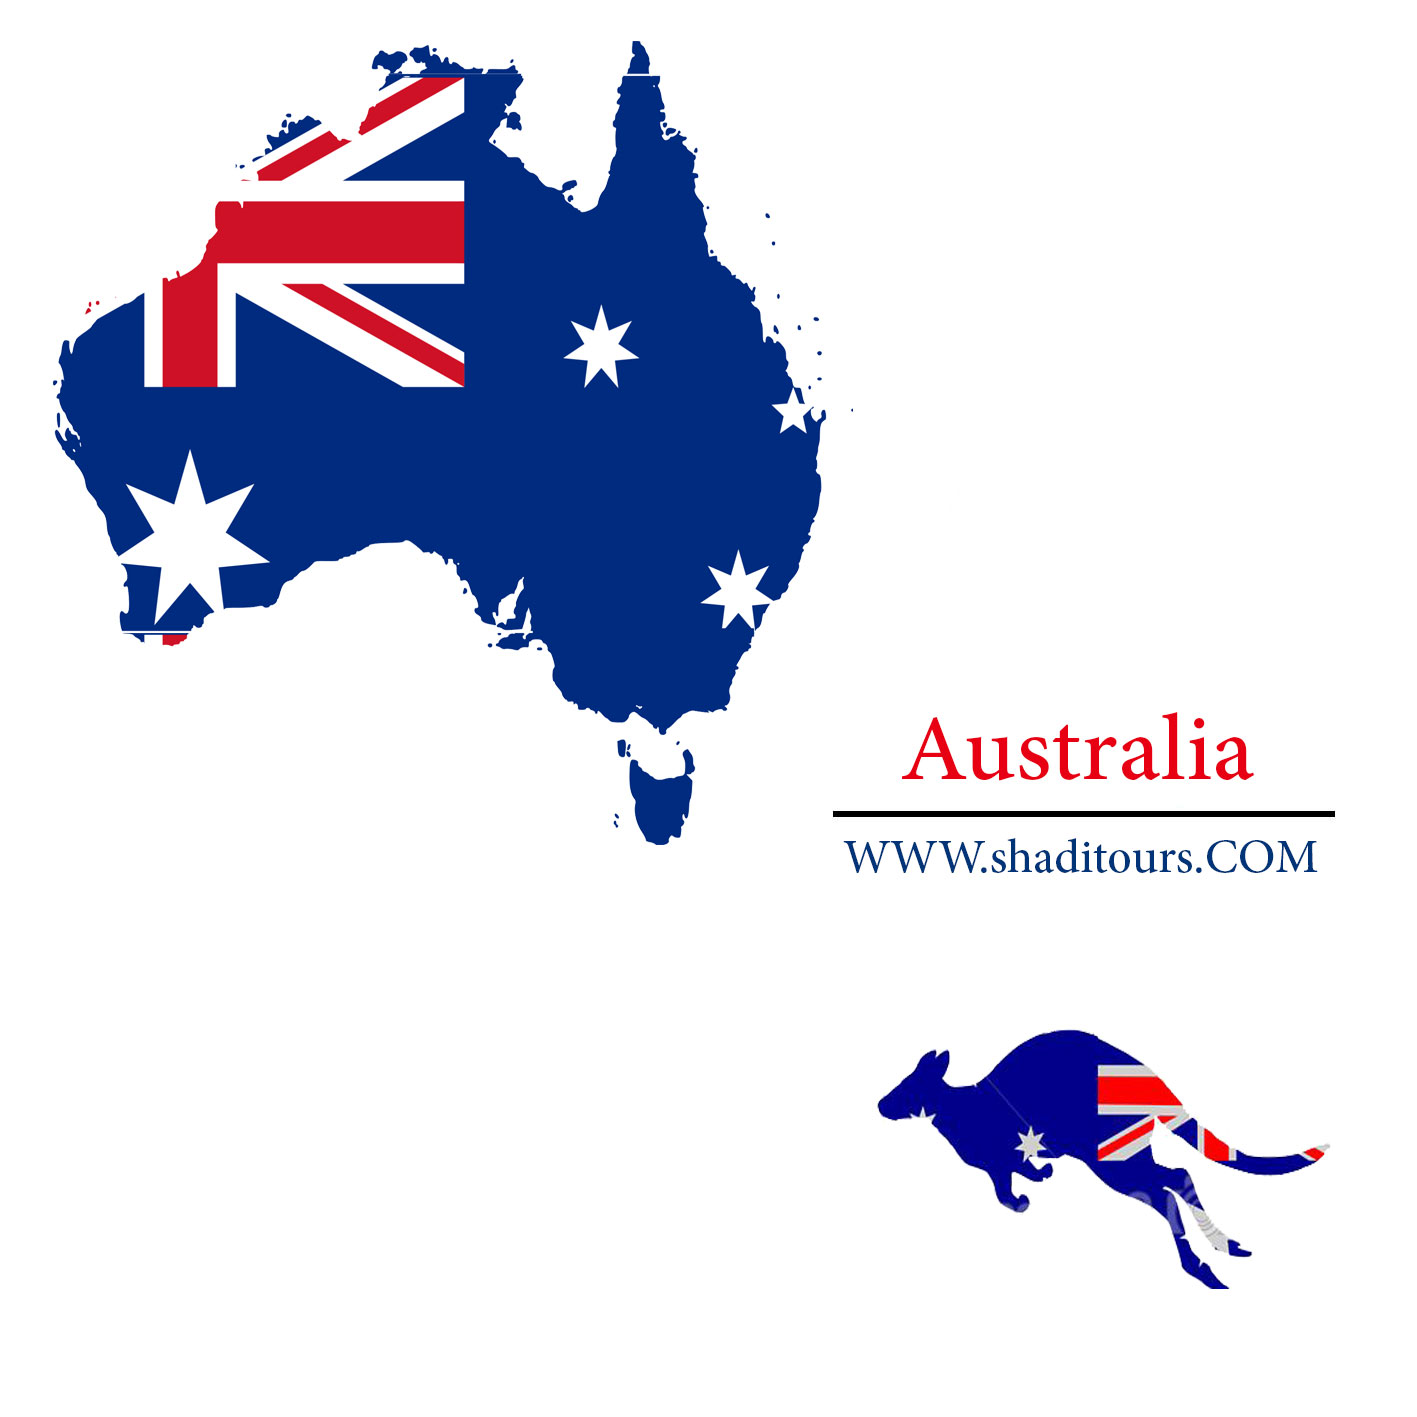 Australia-shaditours